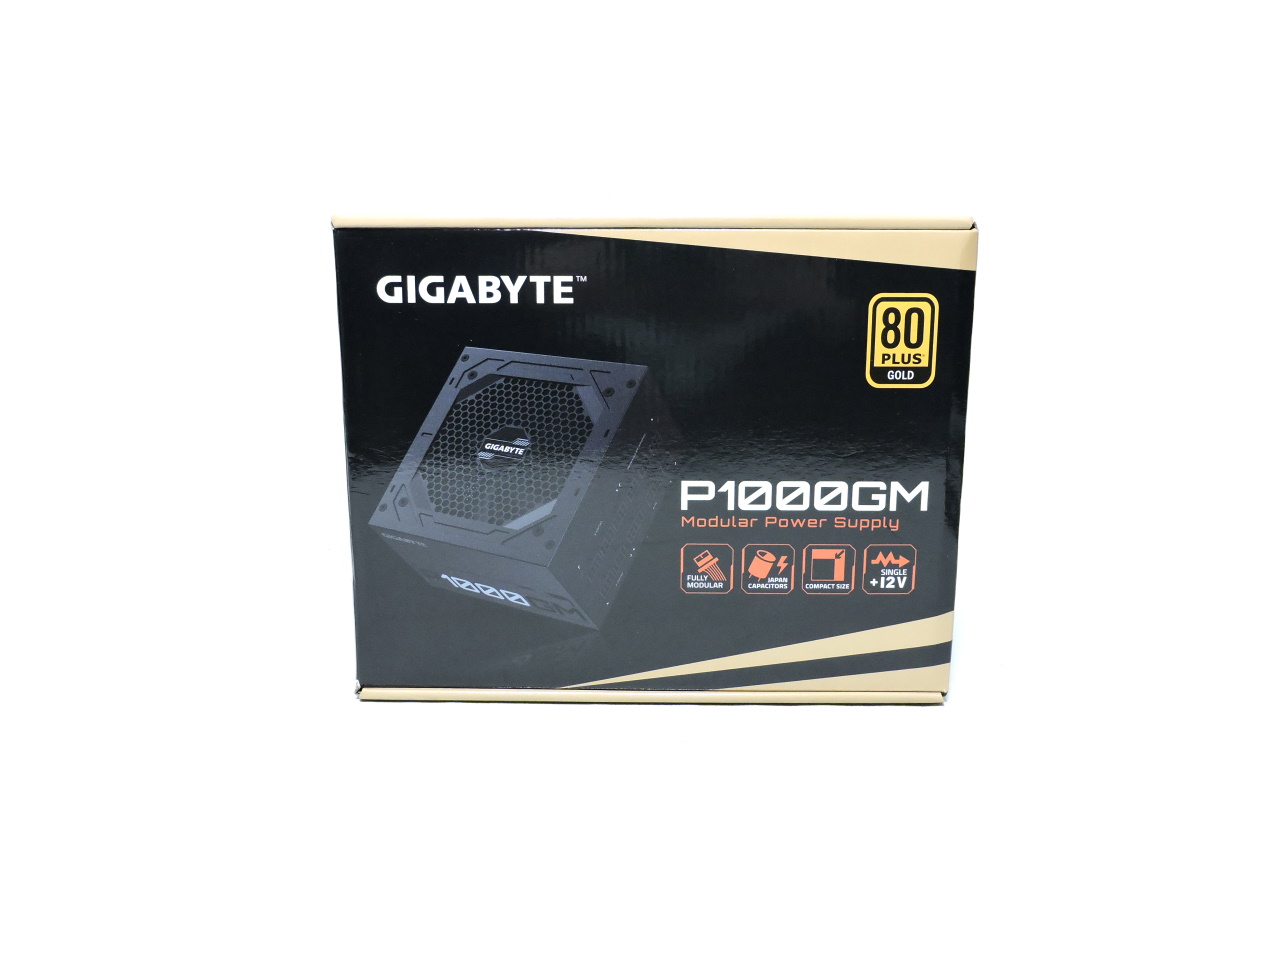 Gigabyte P1000GM 1000w Gold PSU : r/pcmasterrace